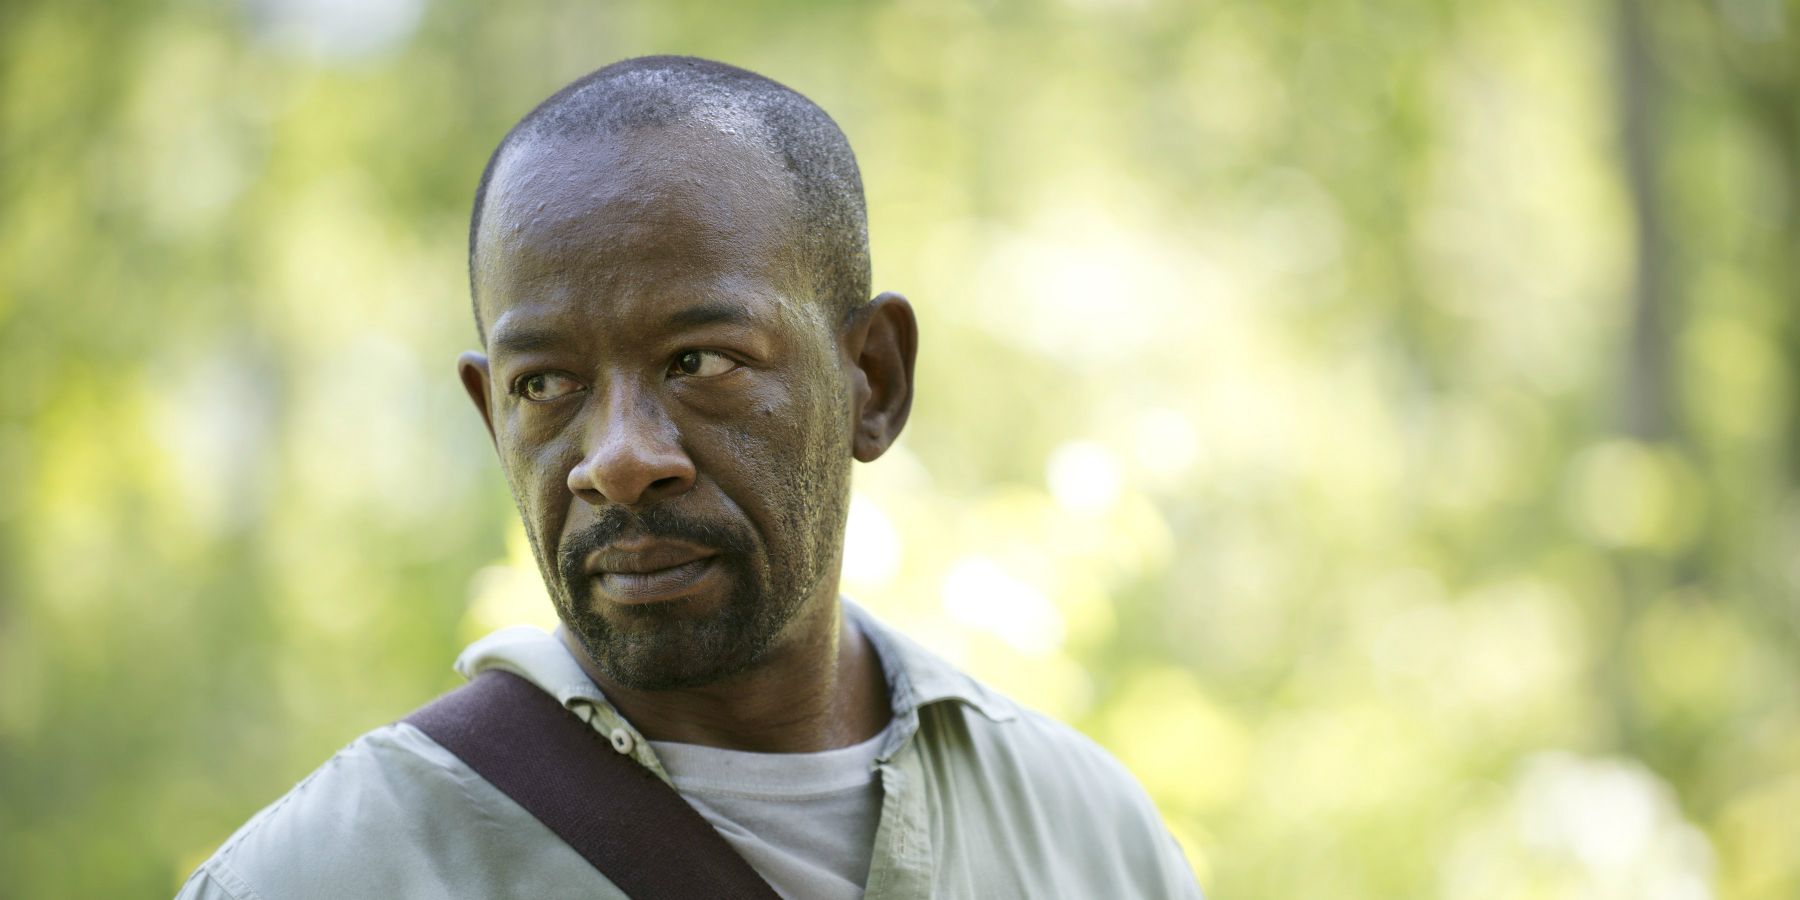 Morgan from The Walking Dead